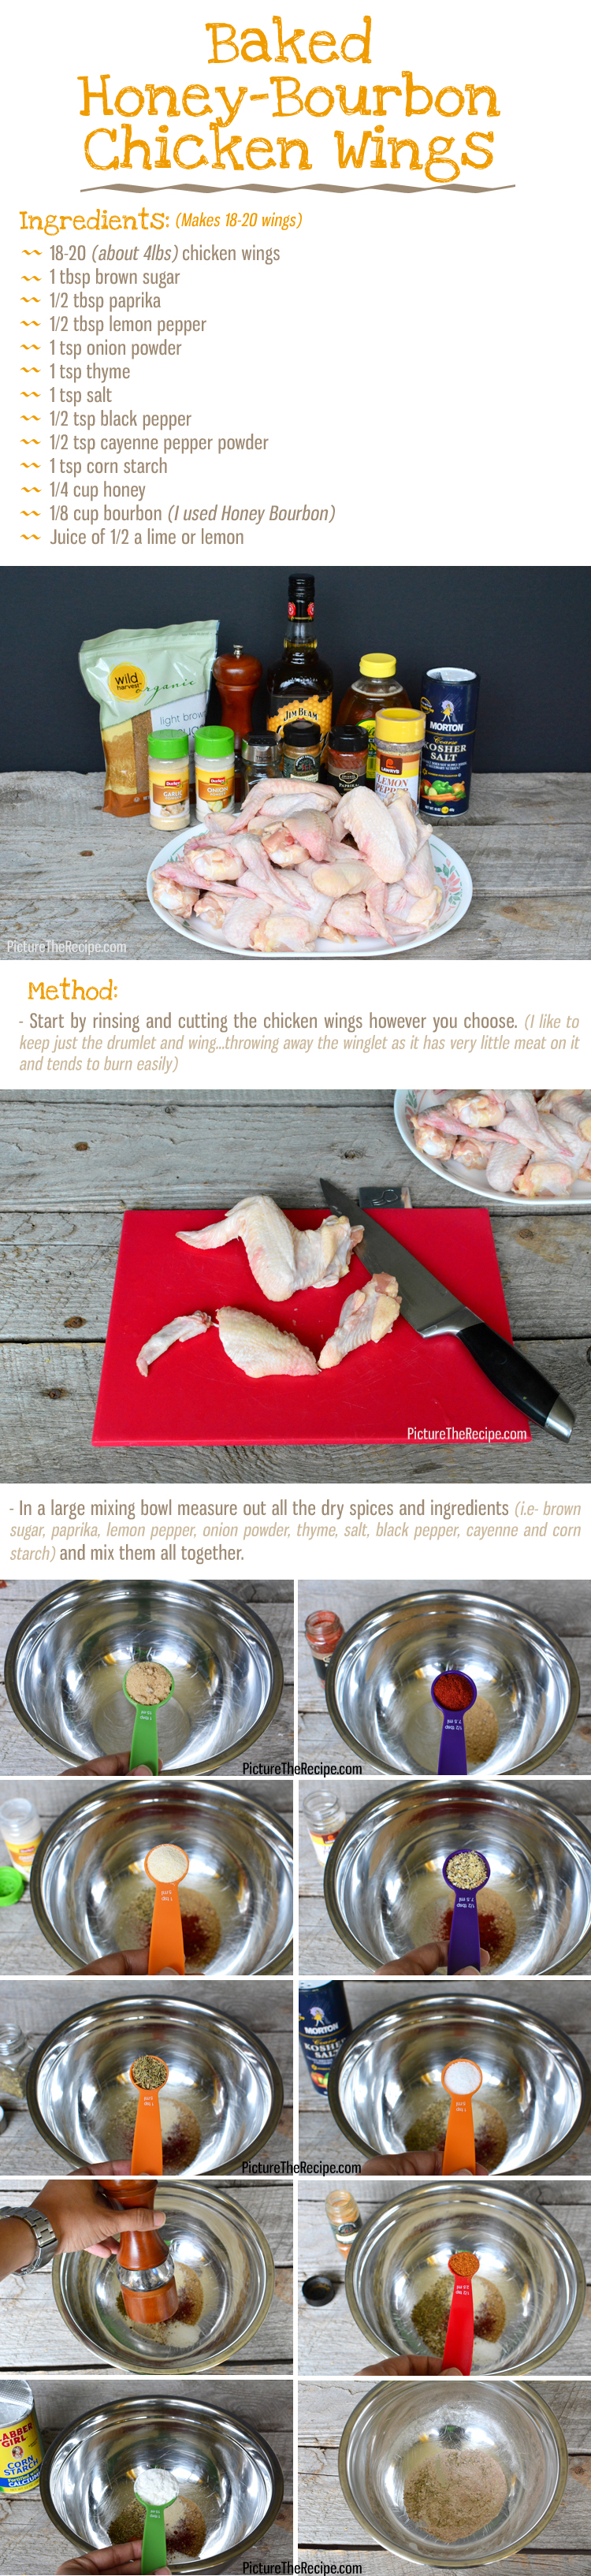 Baken Honey Bourbon Chicken Wings Recipe by PictureTheRecipe (Part-1)